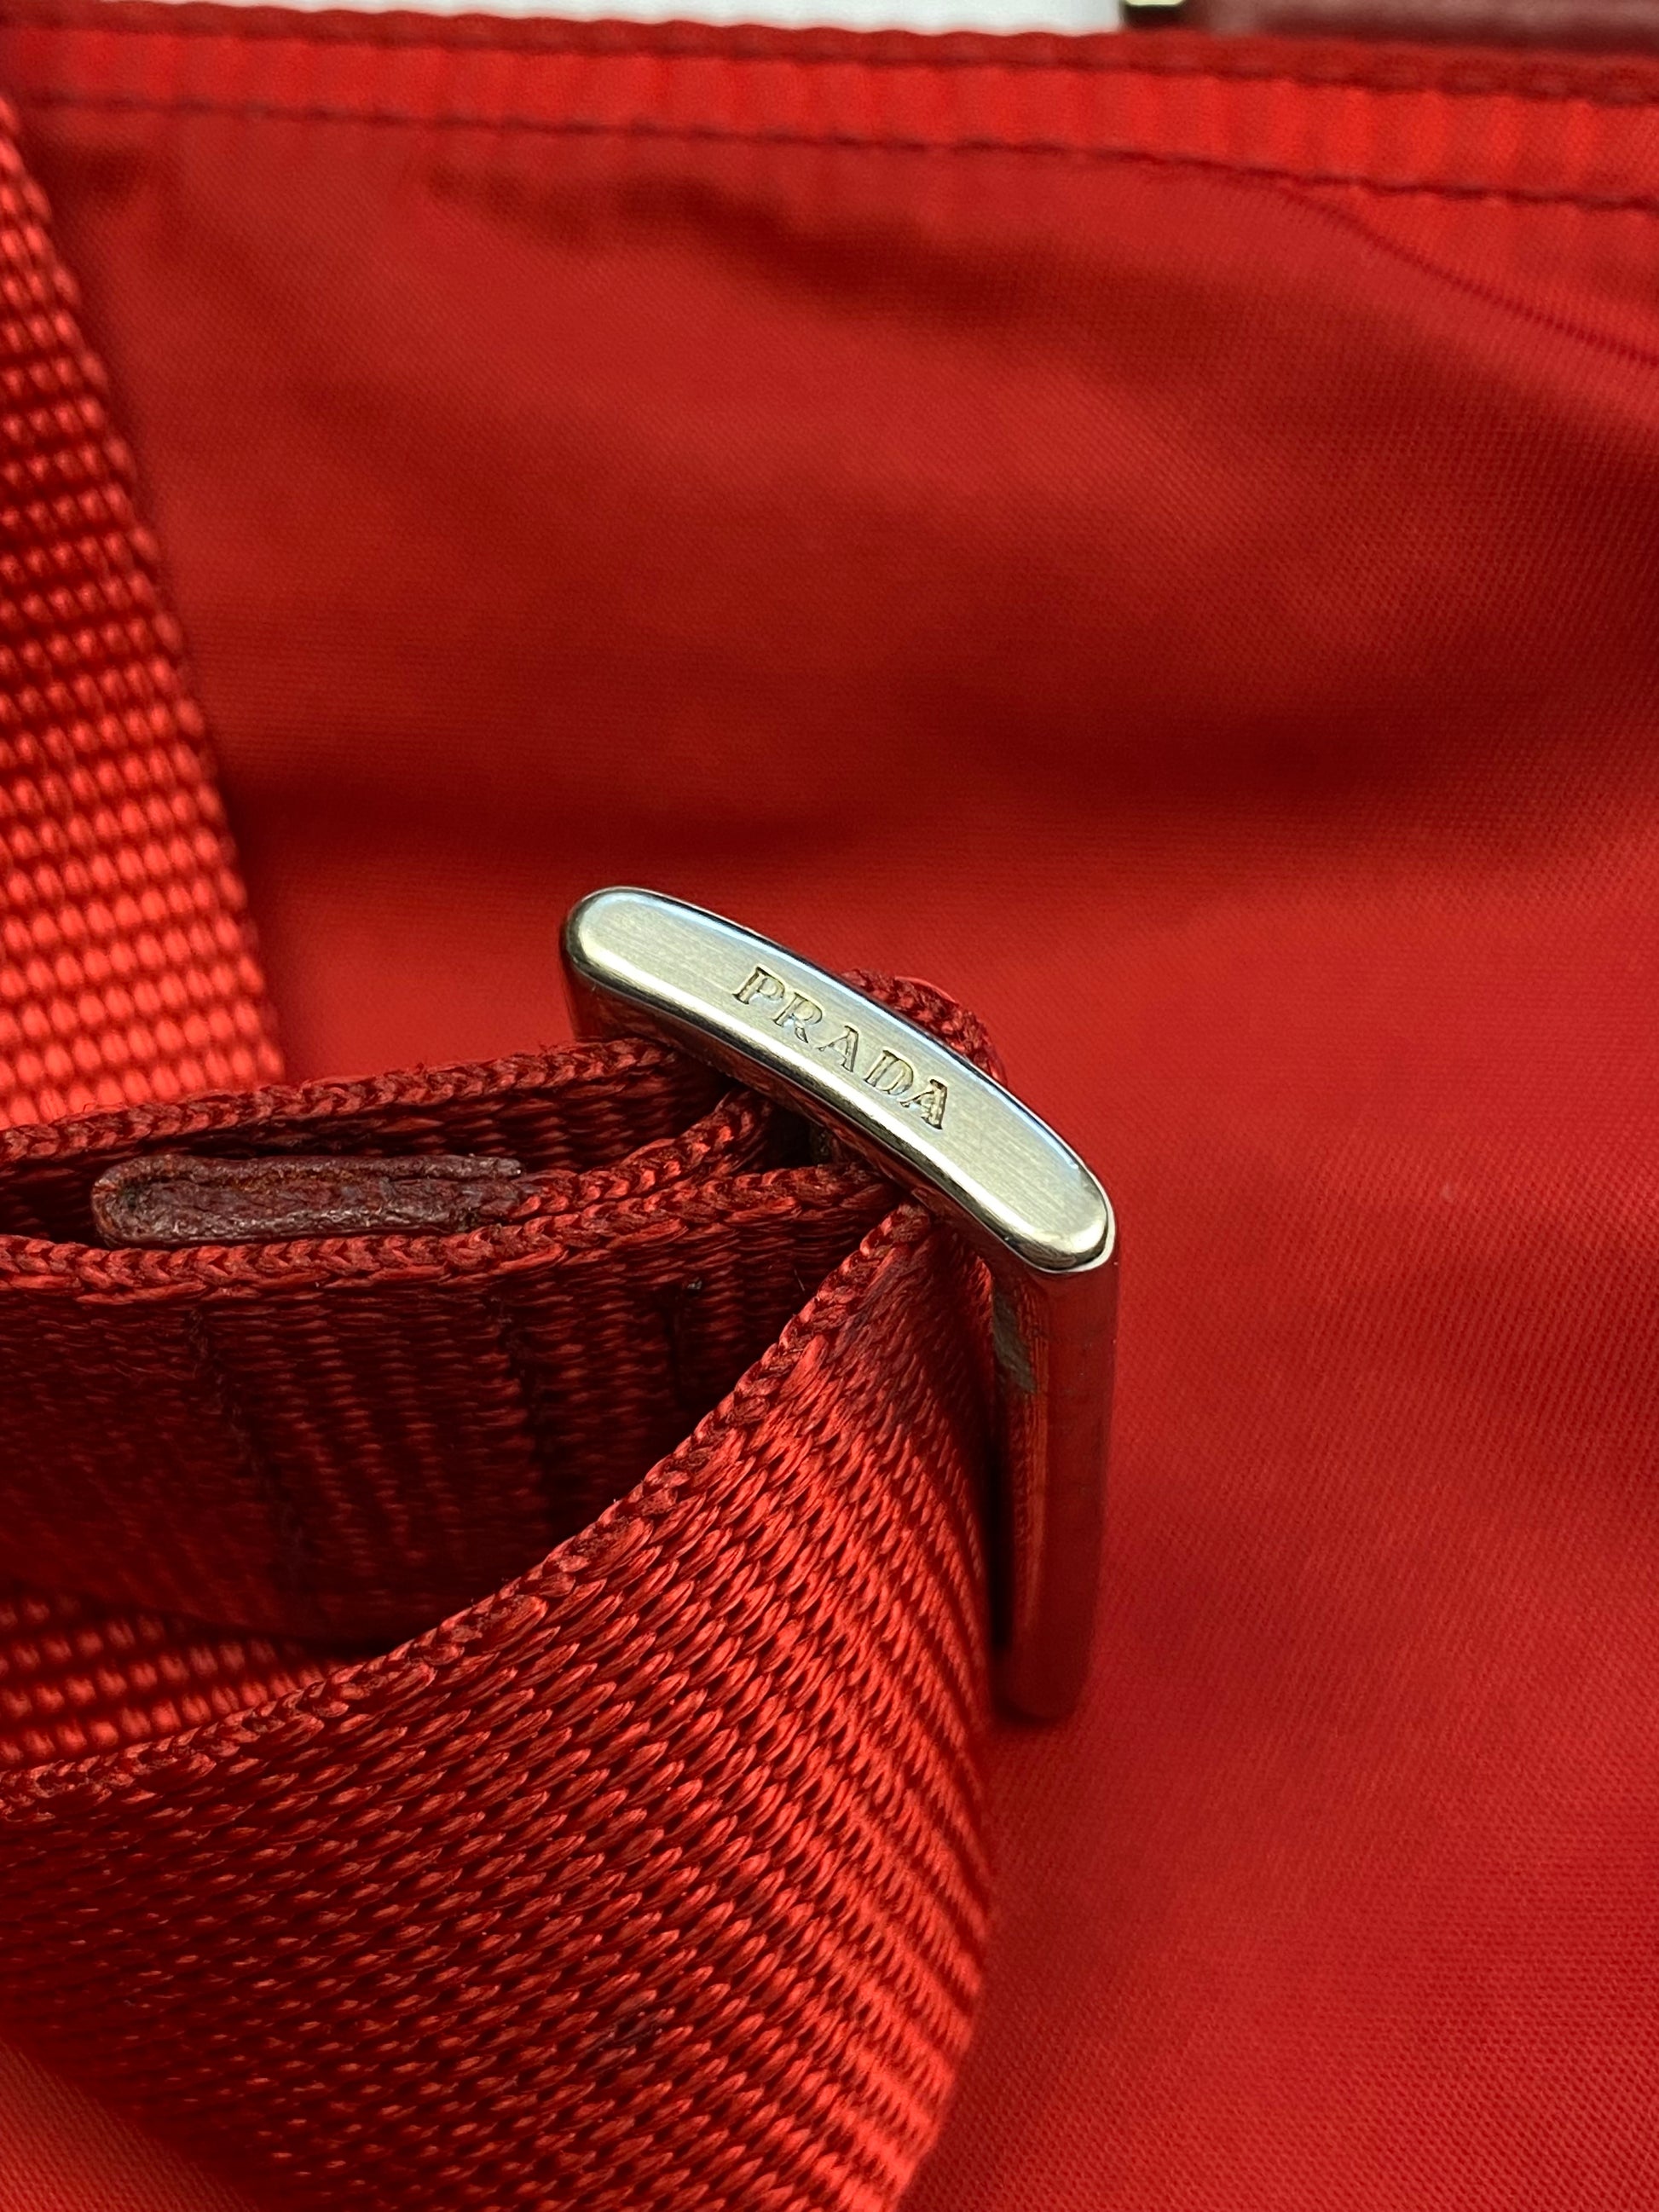 prada Linea Rossa Red Tab Nylon Crossbody Messenger Bag / Shoulder